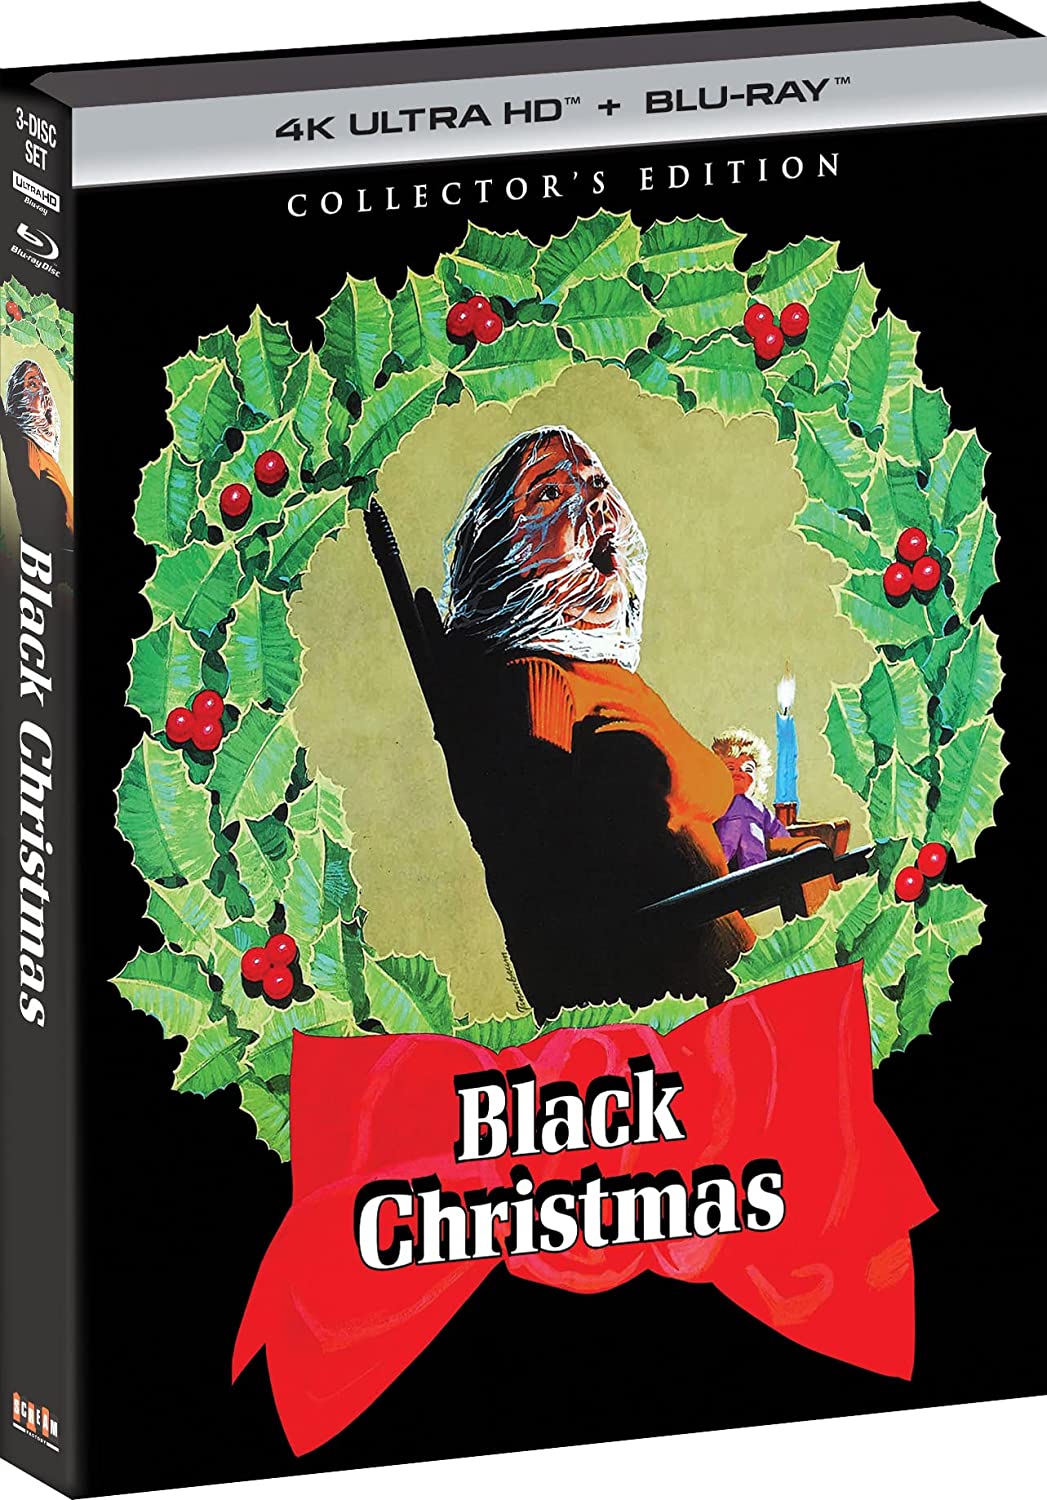 Black Christmas Scream Factory 4K UHD/Blu-Ray [NEW] [SLIPCOVER]